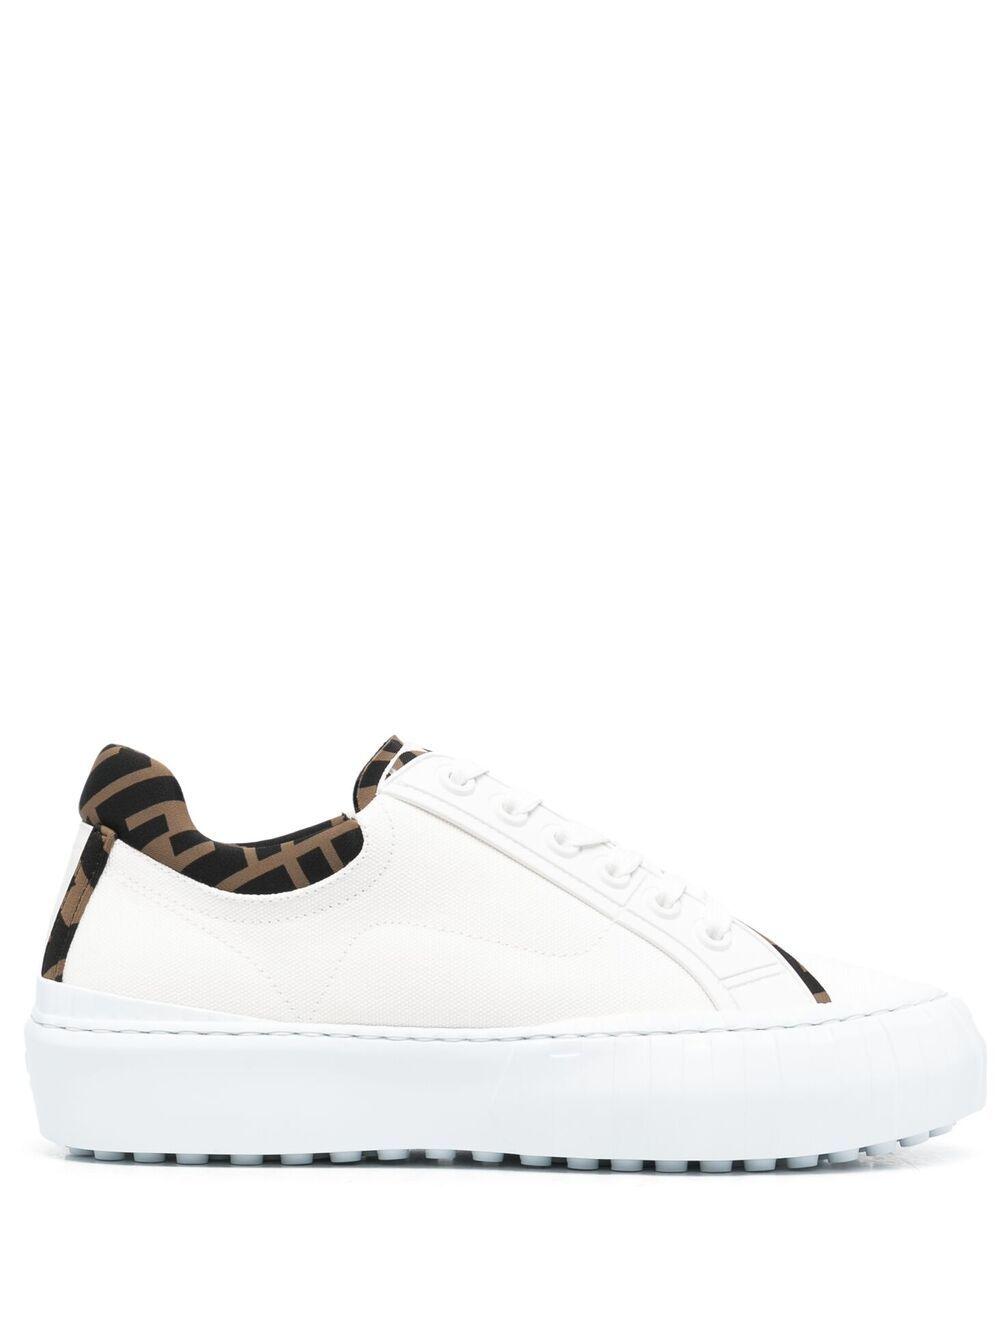 Fendi Sneakers White | Lyst